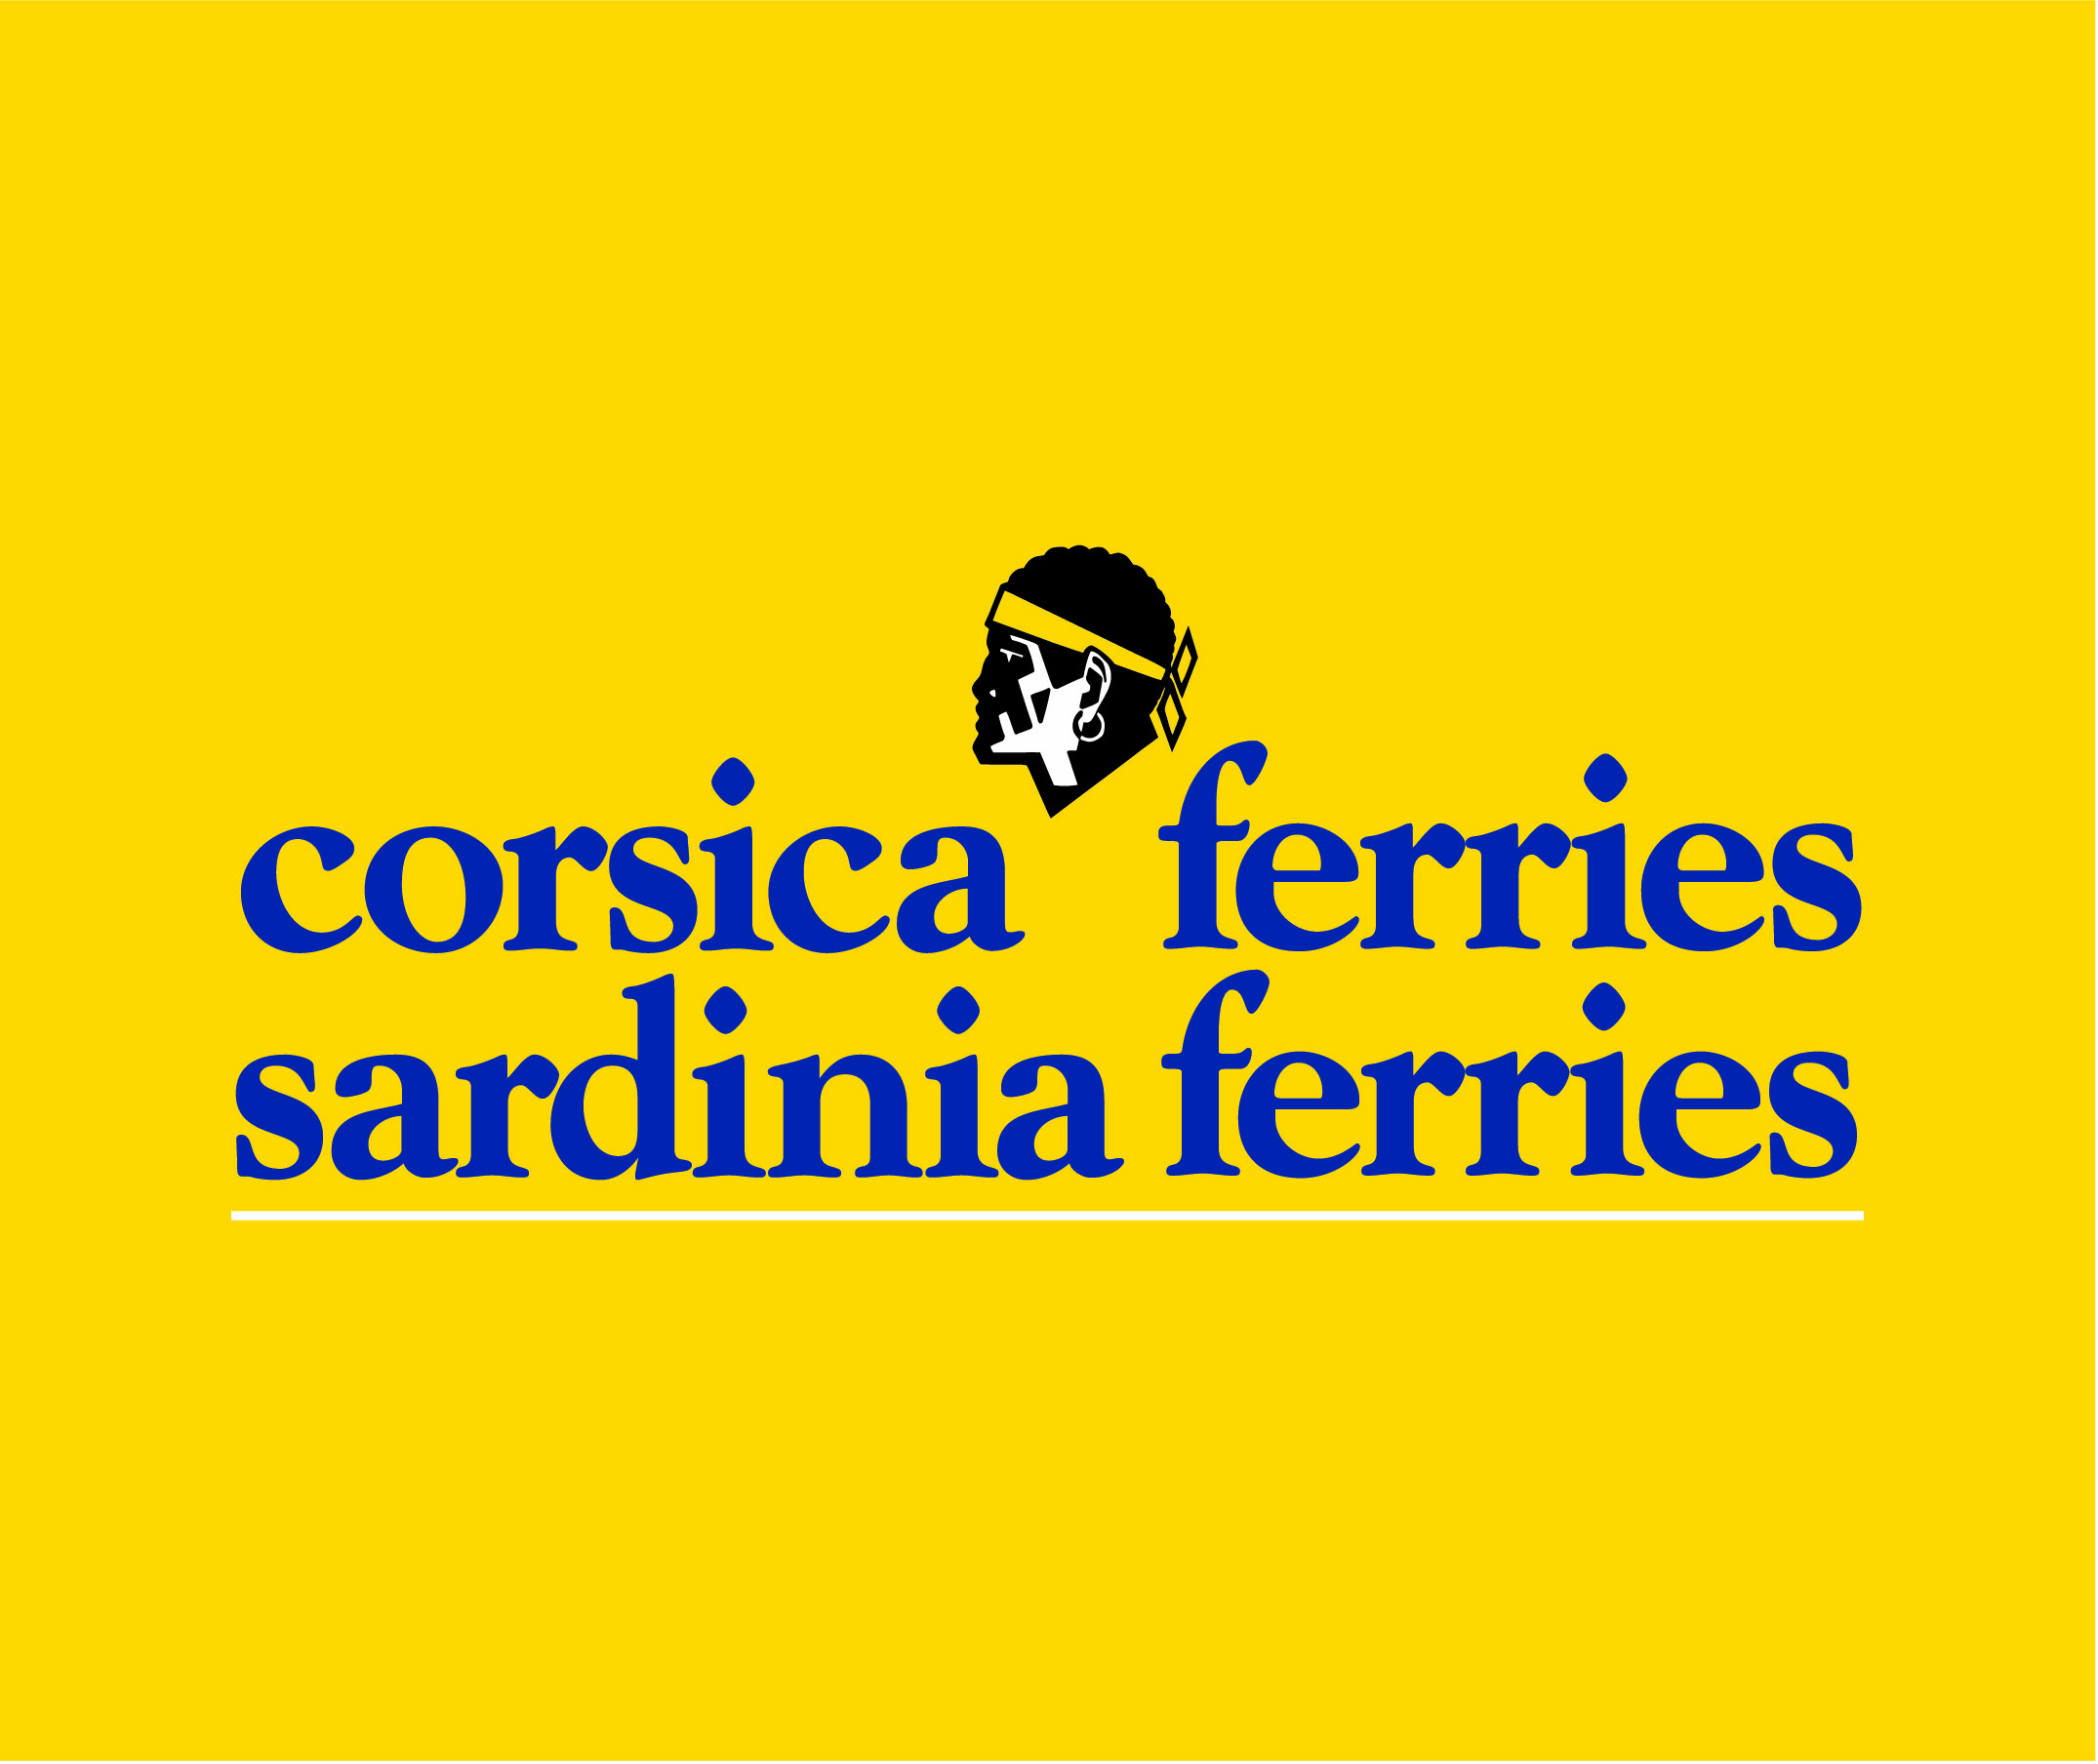 sardinia ferries